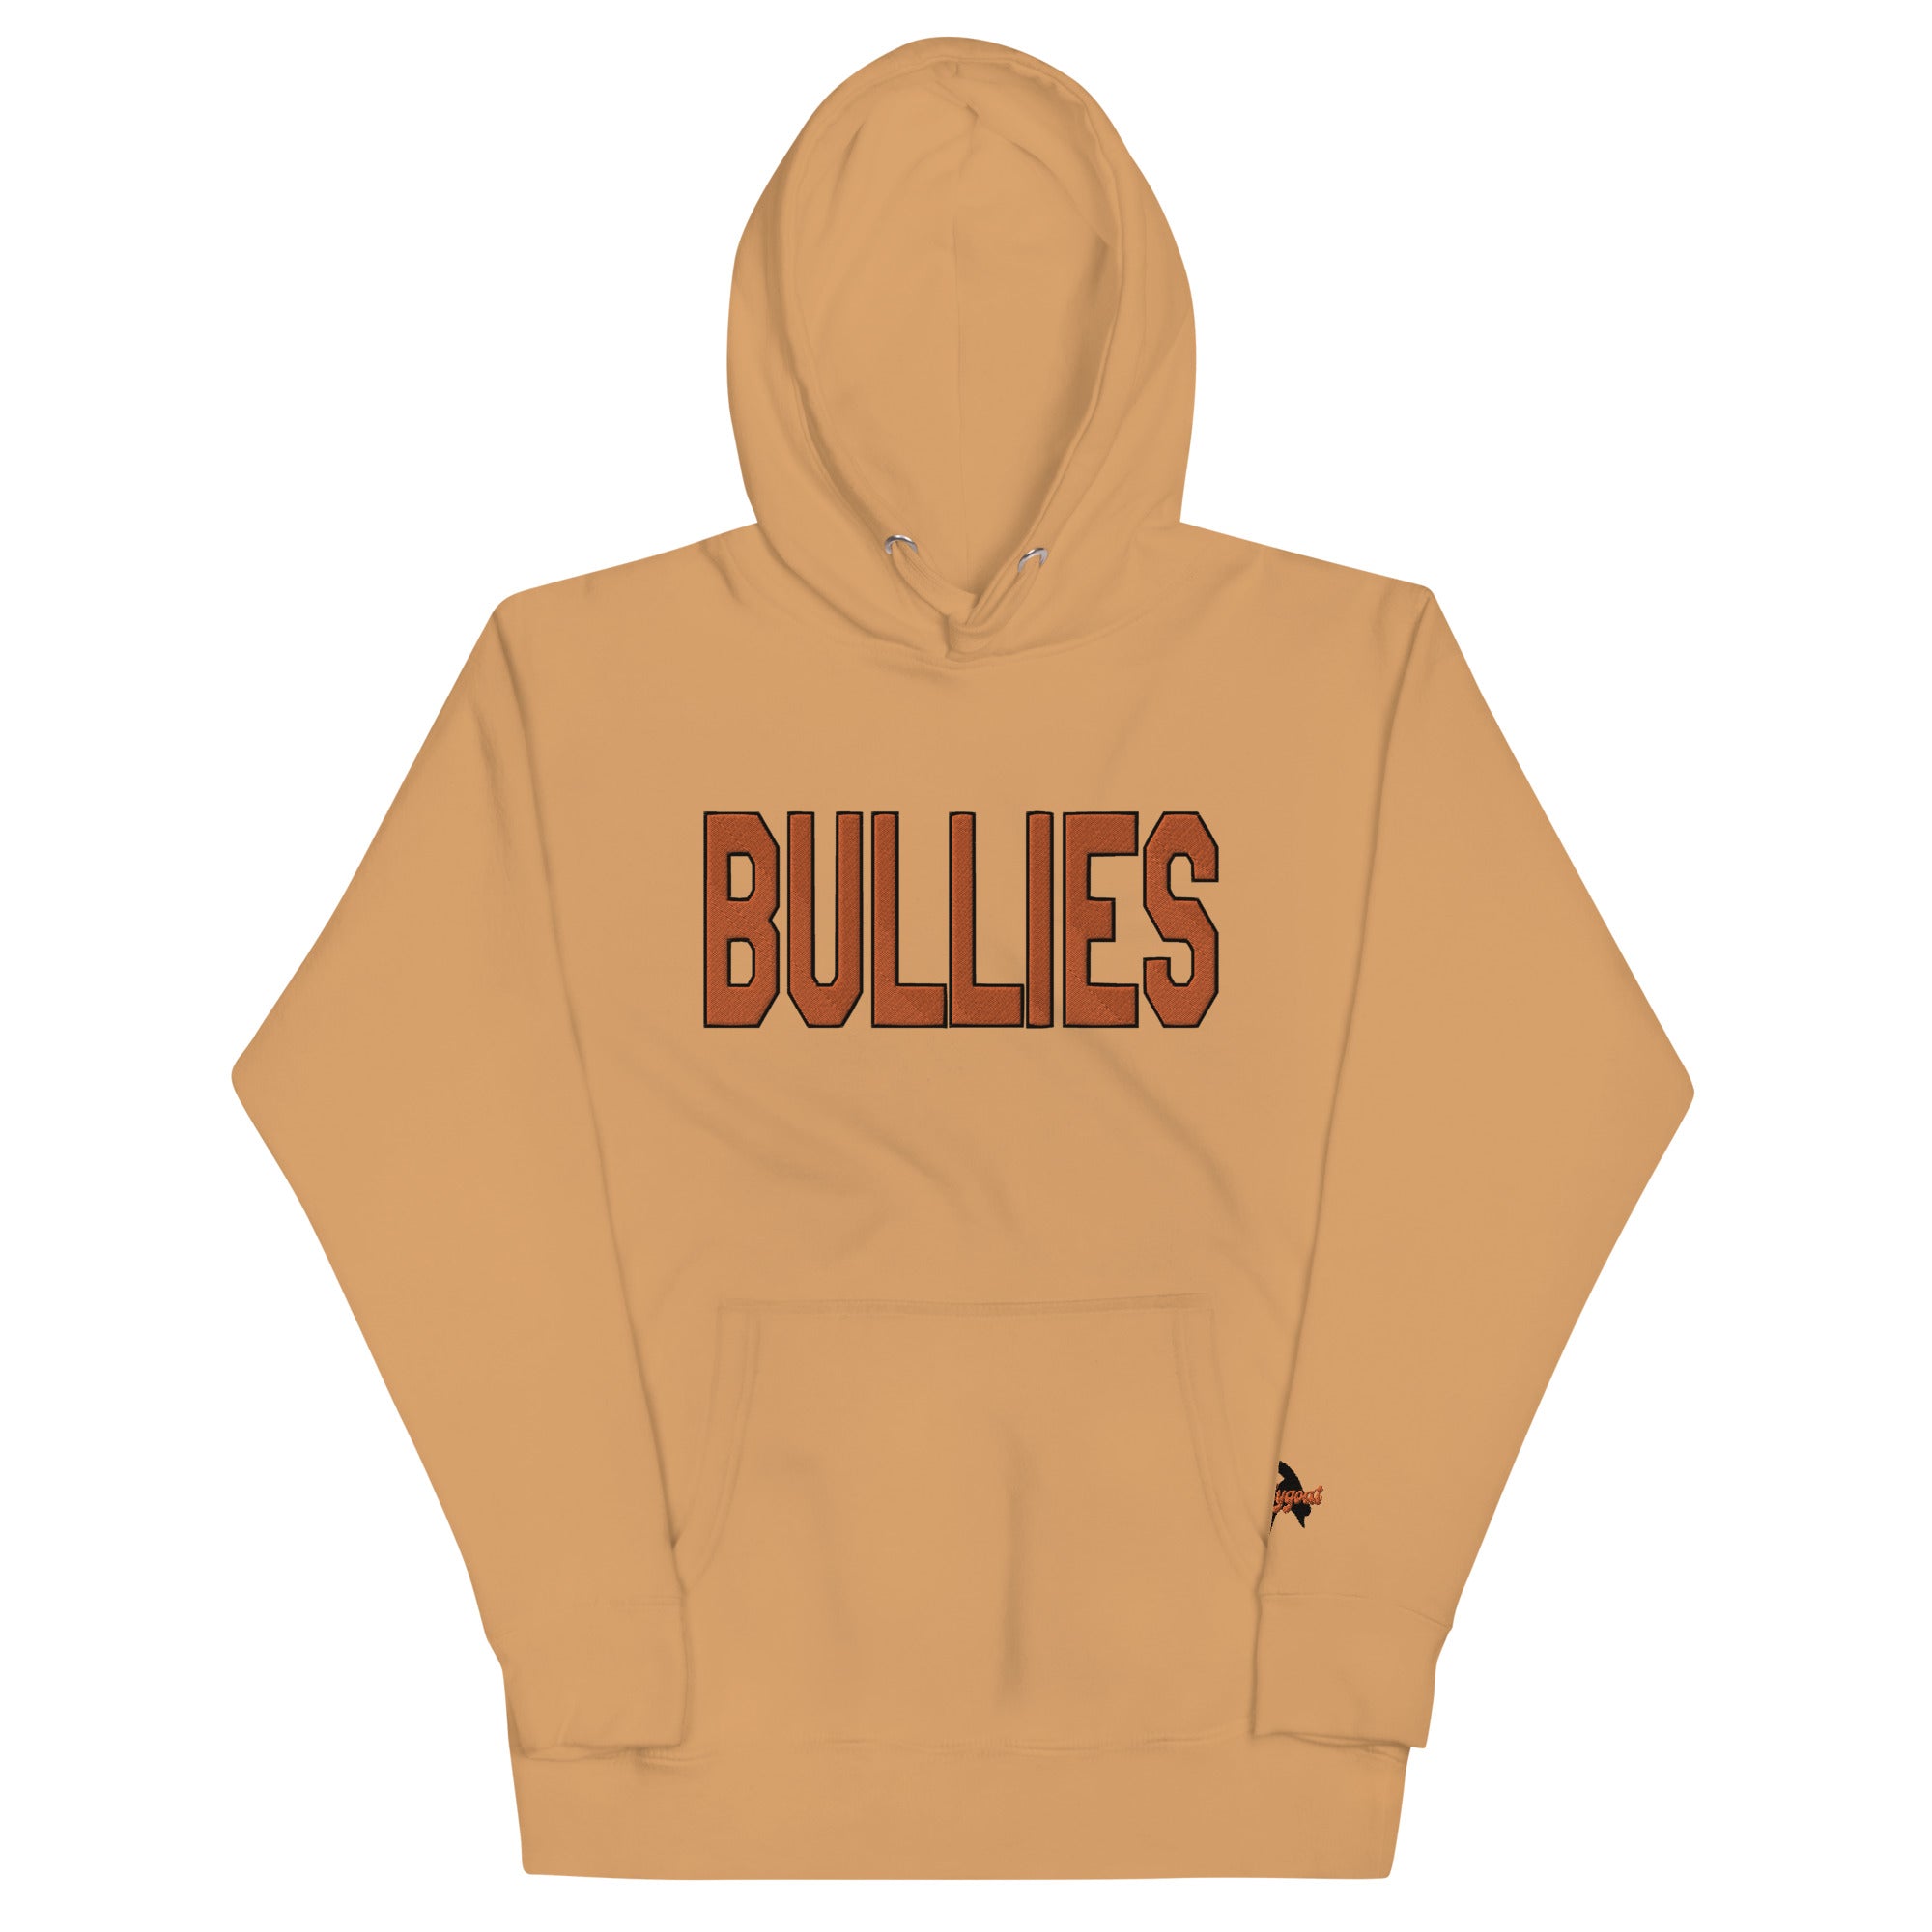 "Bullies" Embroidered Hoodie